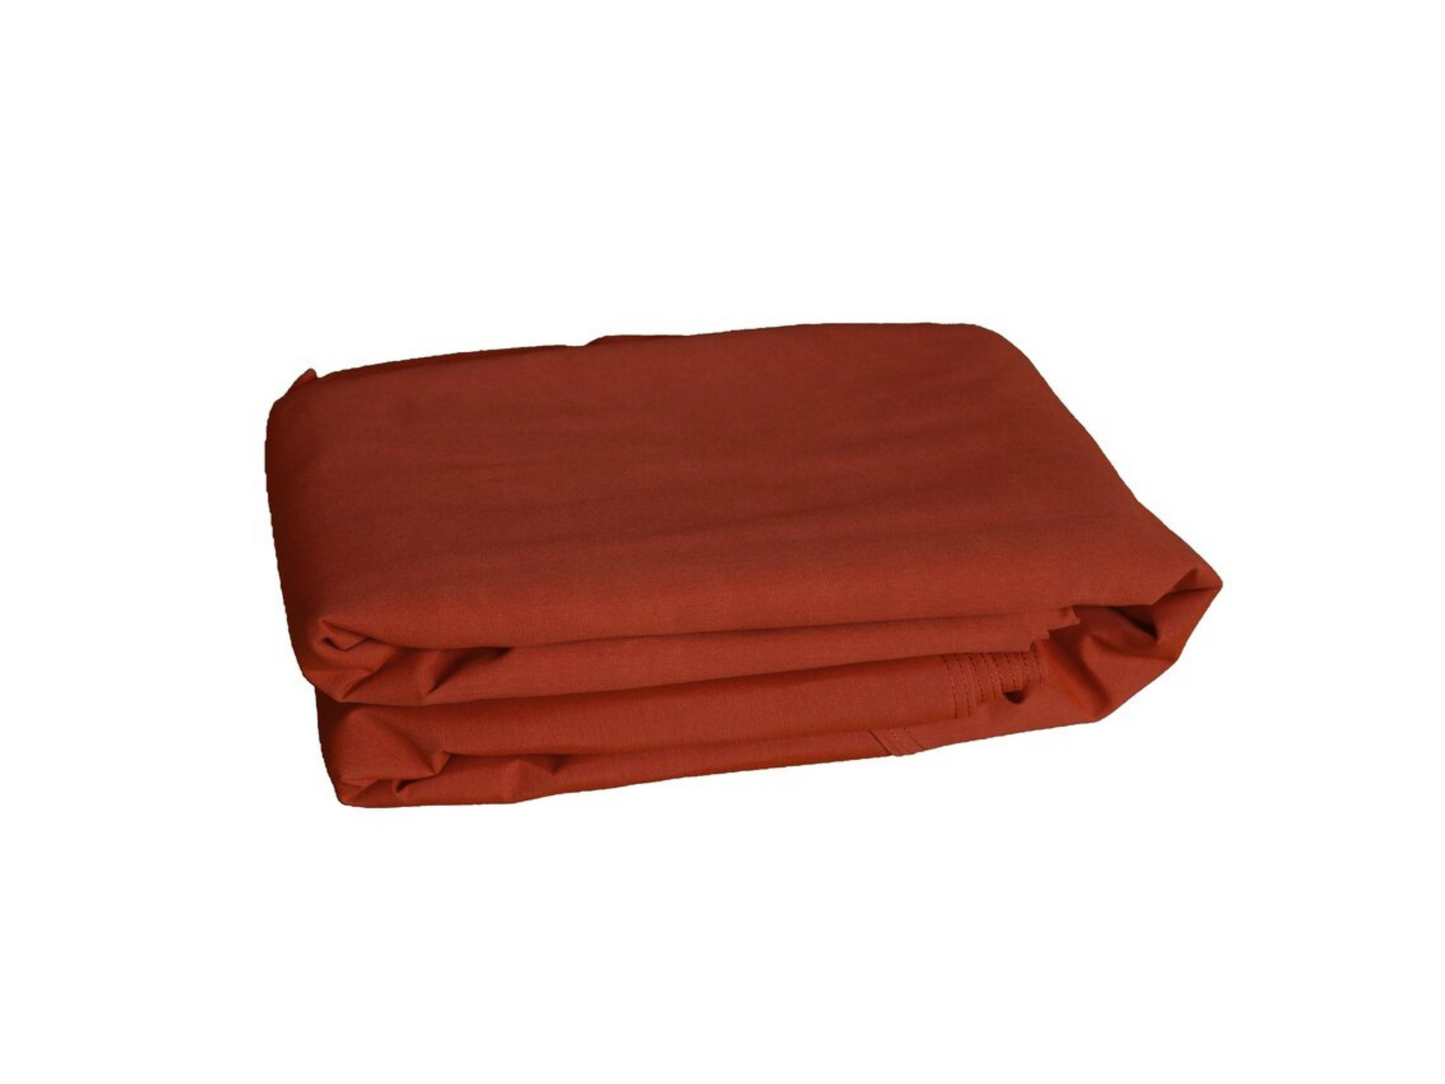 Replacement Canopy for Kingsbury Gazebo (GZ584), Sunbrella® Fabric in Rust